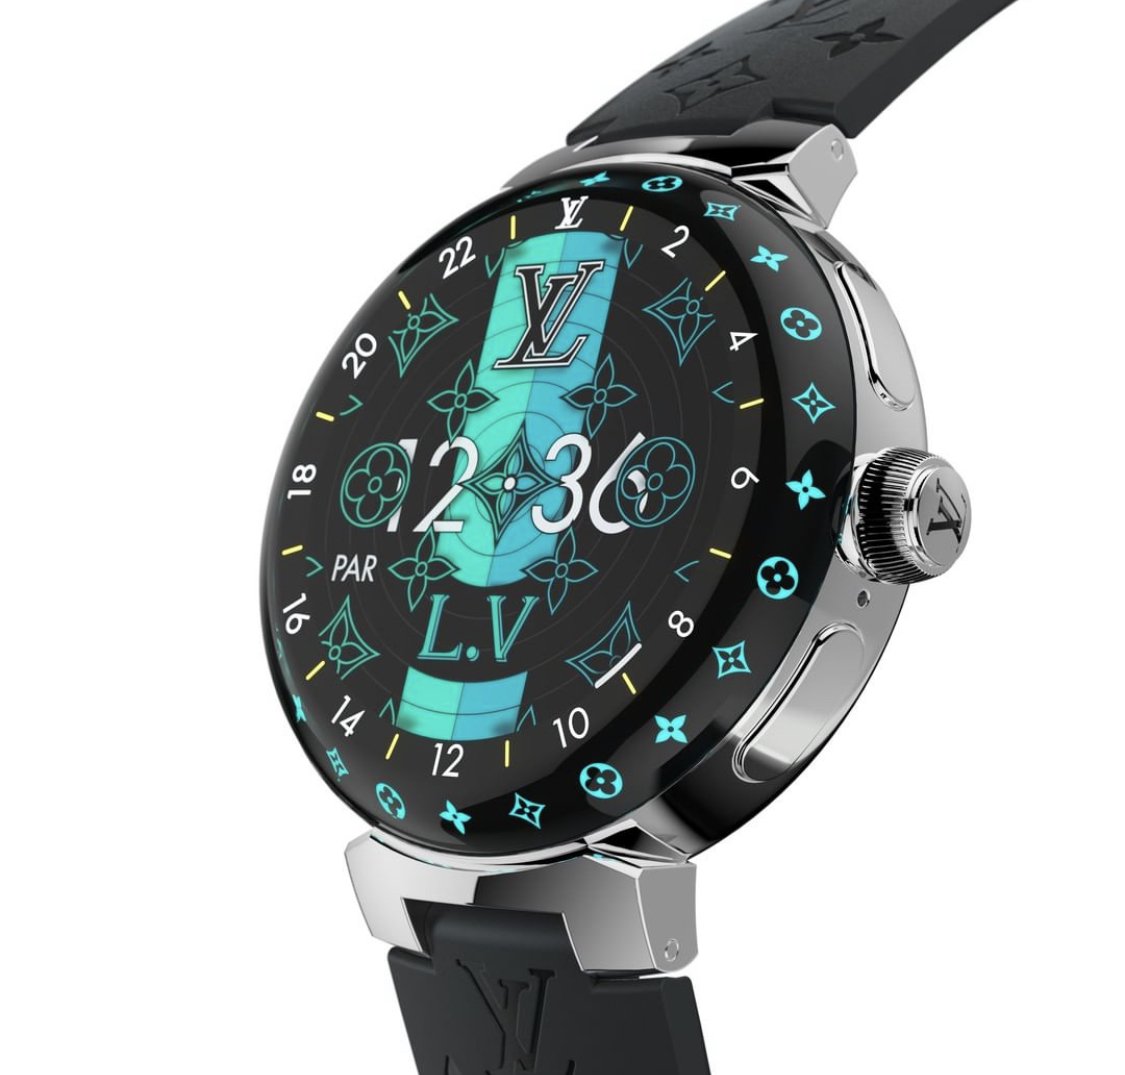 Louis Vuitton Tambour Horizon Light Up Luxury Smartwatch With